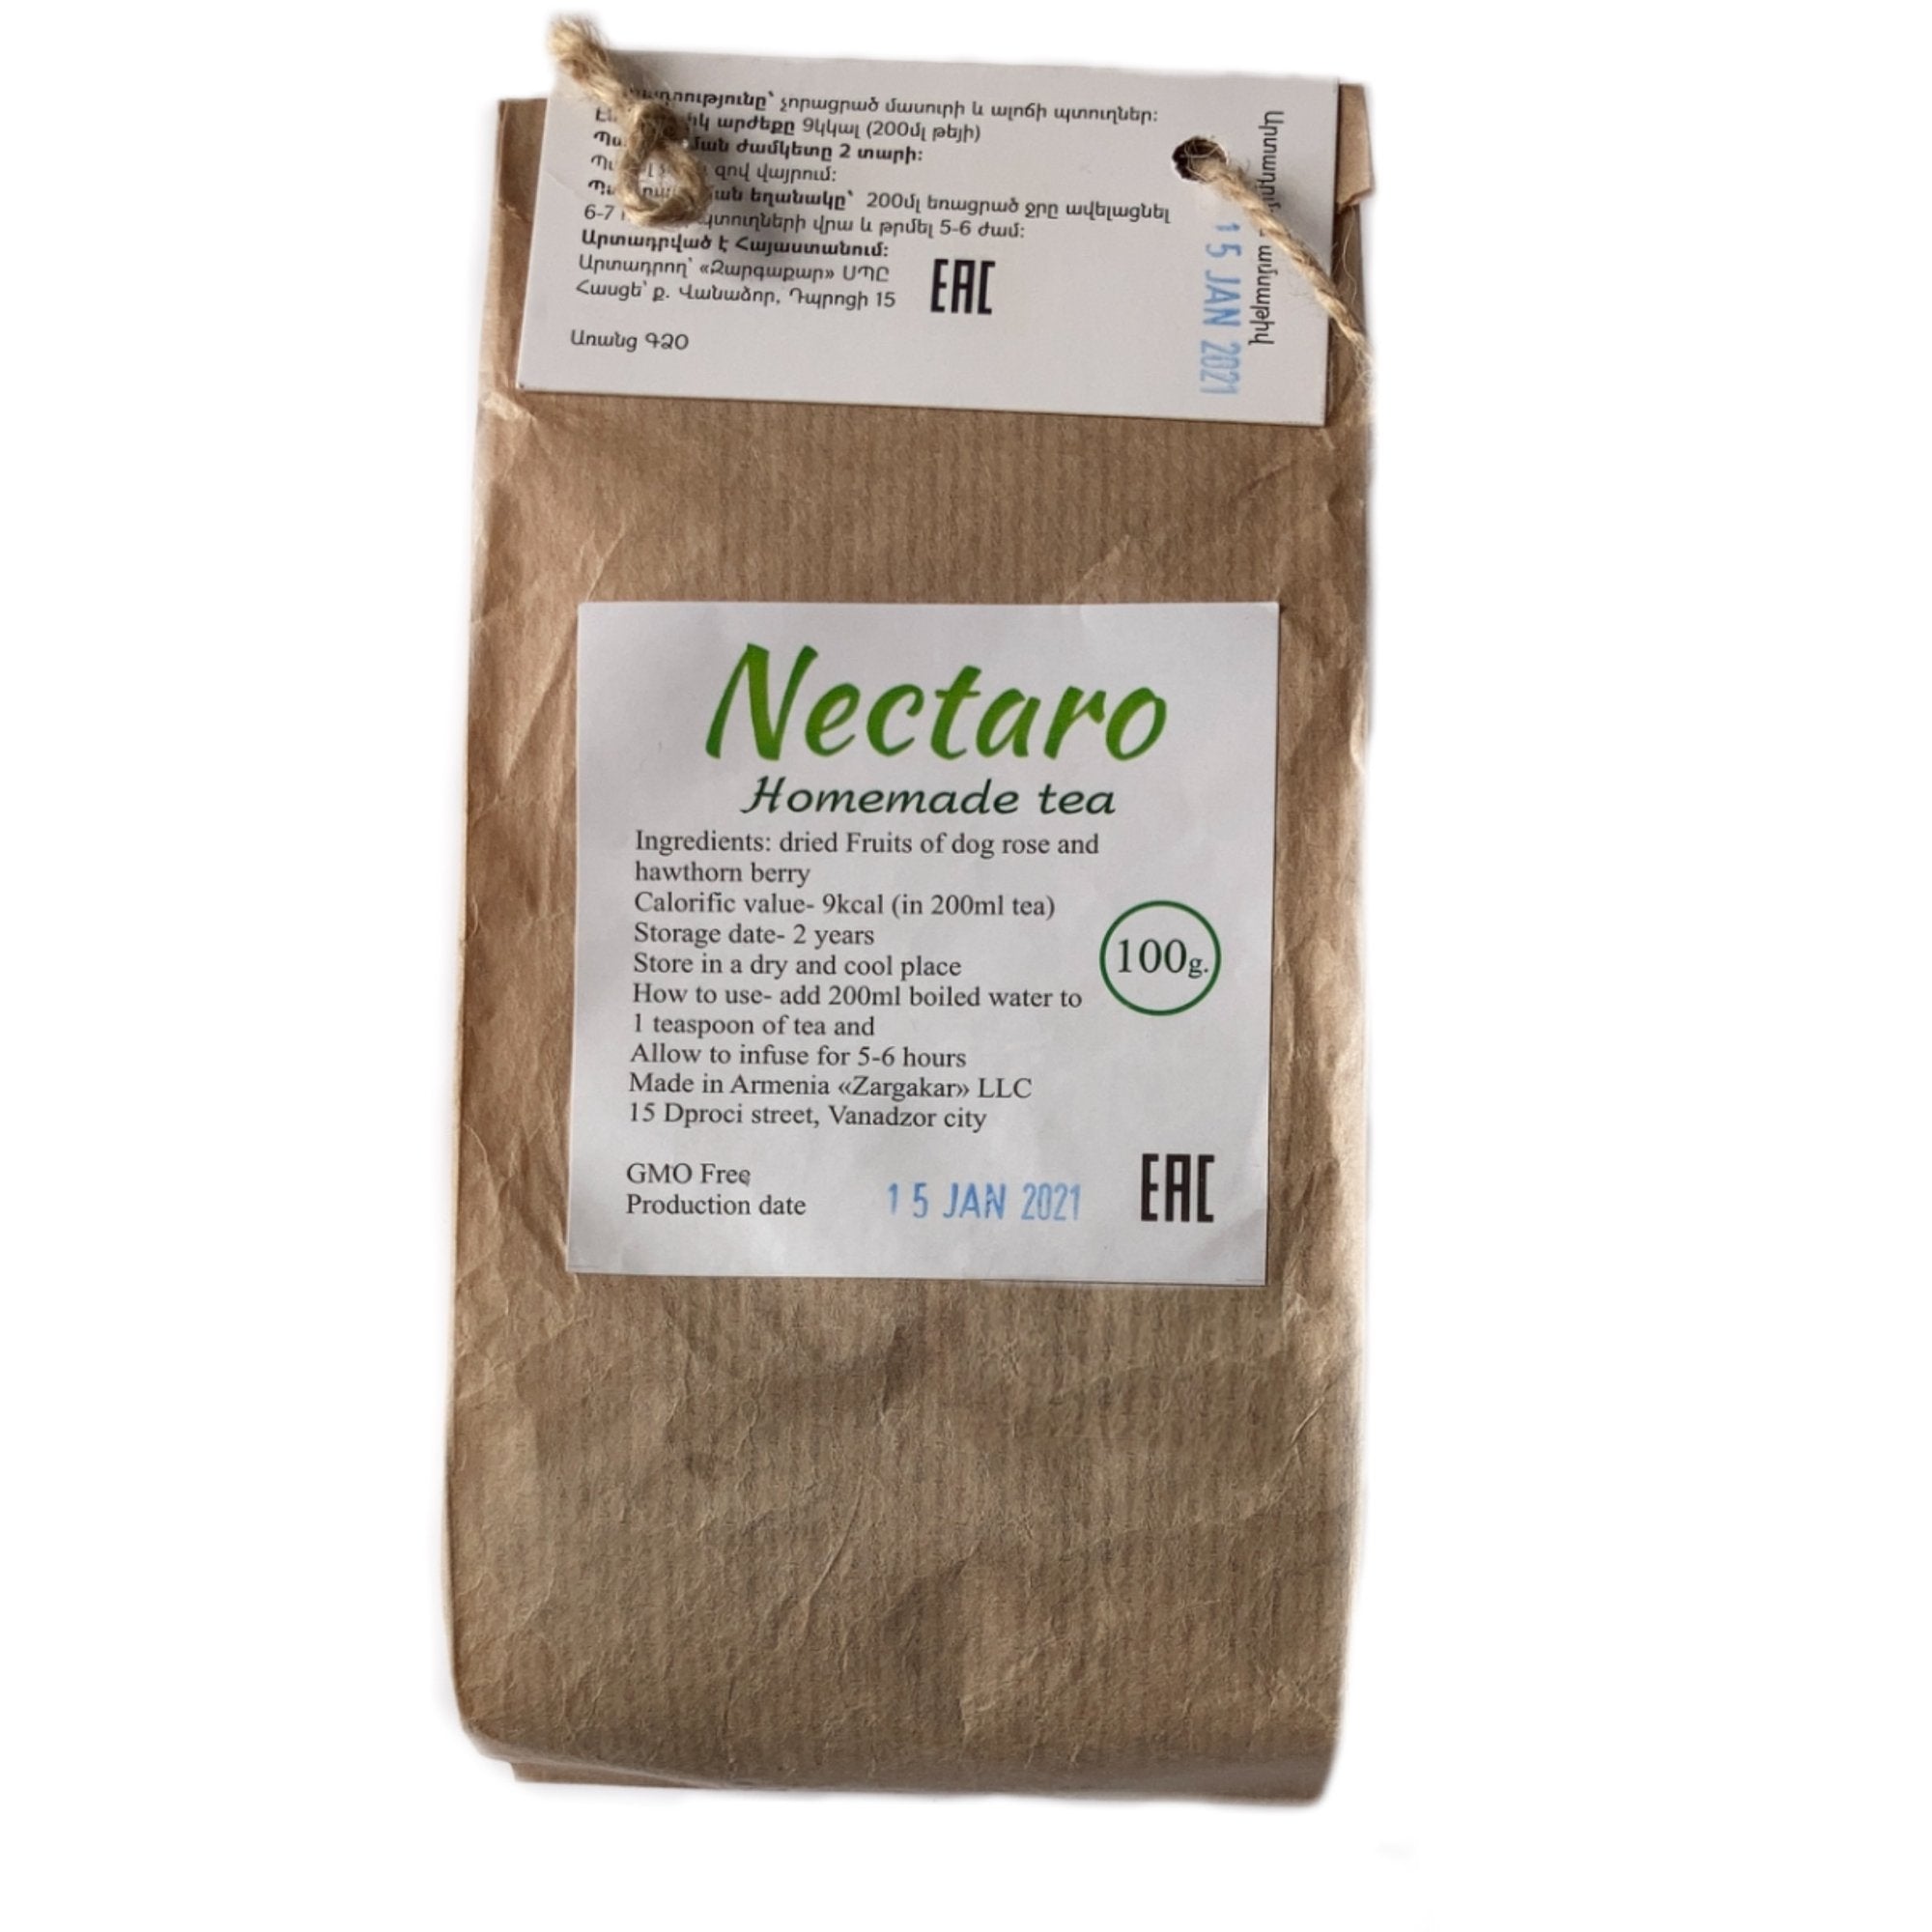 Nectaro Rosehip and Hawthorn Herbal Tea - Vitamin Cocktail - 100g